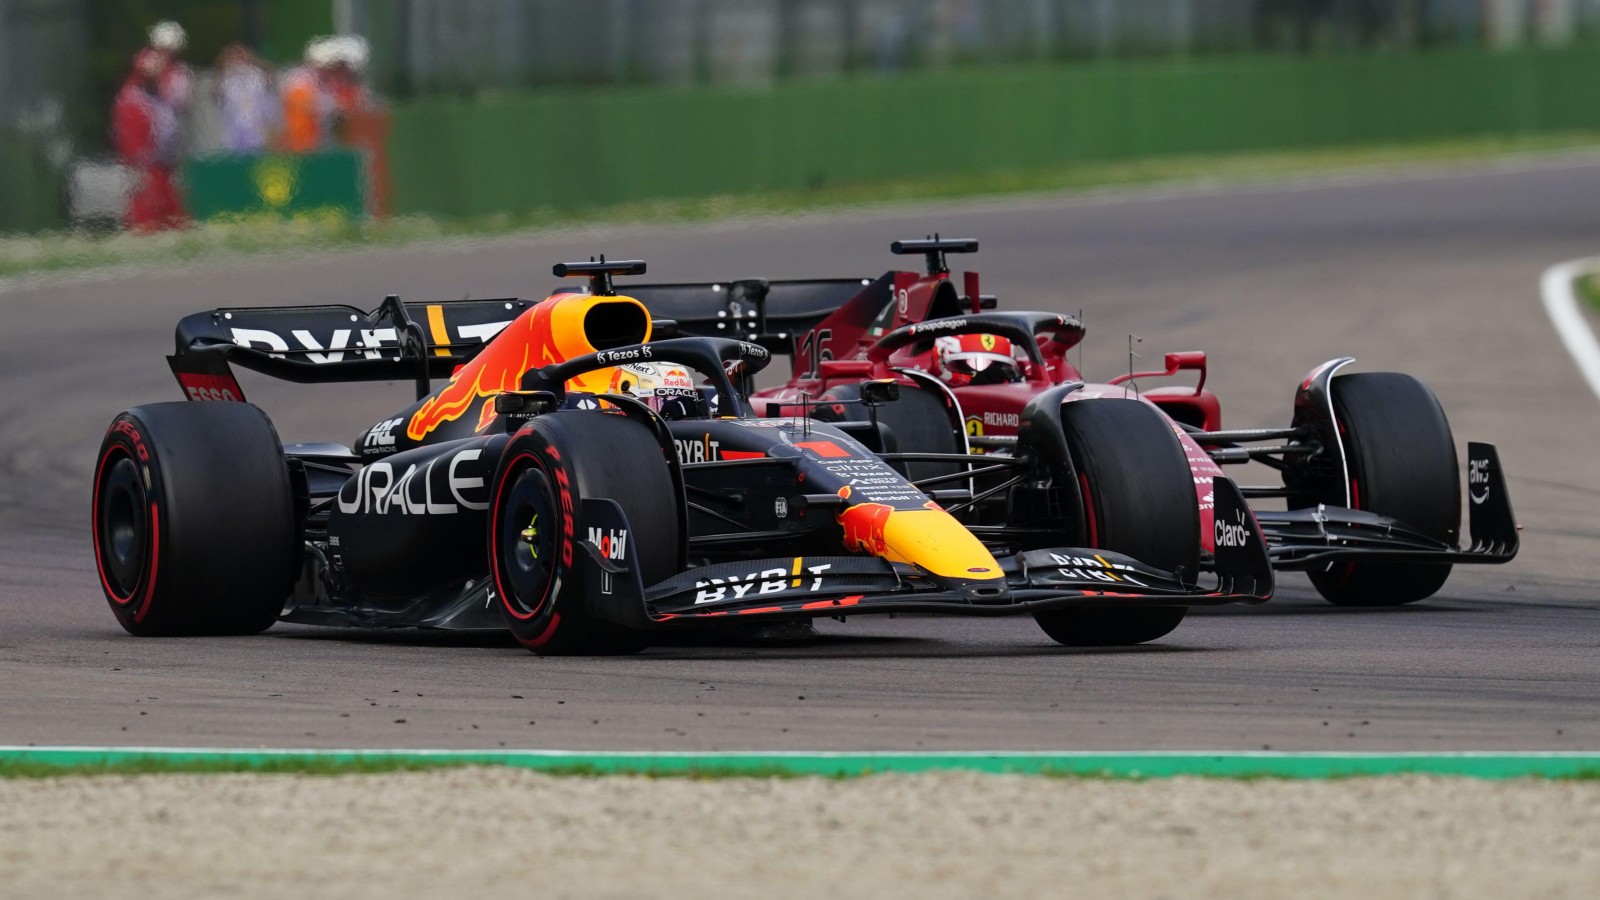 Ferrari: Red Bull advantage is maximum a couple of tenths